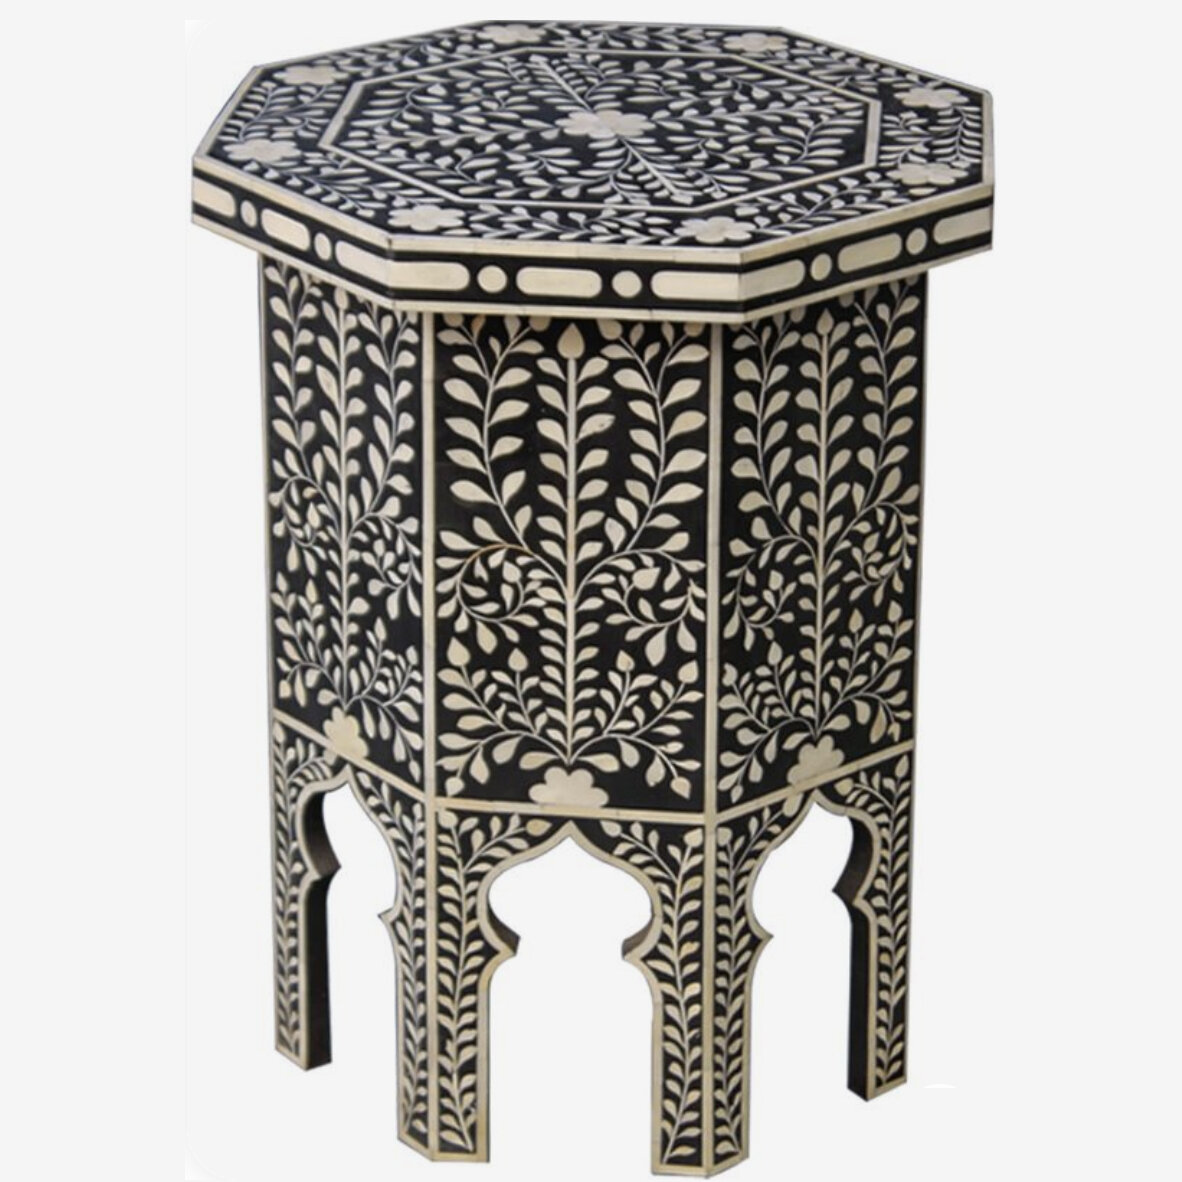 00004-Moroccan-Bone-inlay-Furniture-Moroccan-Berber-Carpets.jpg